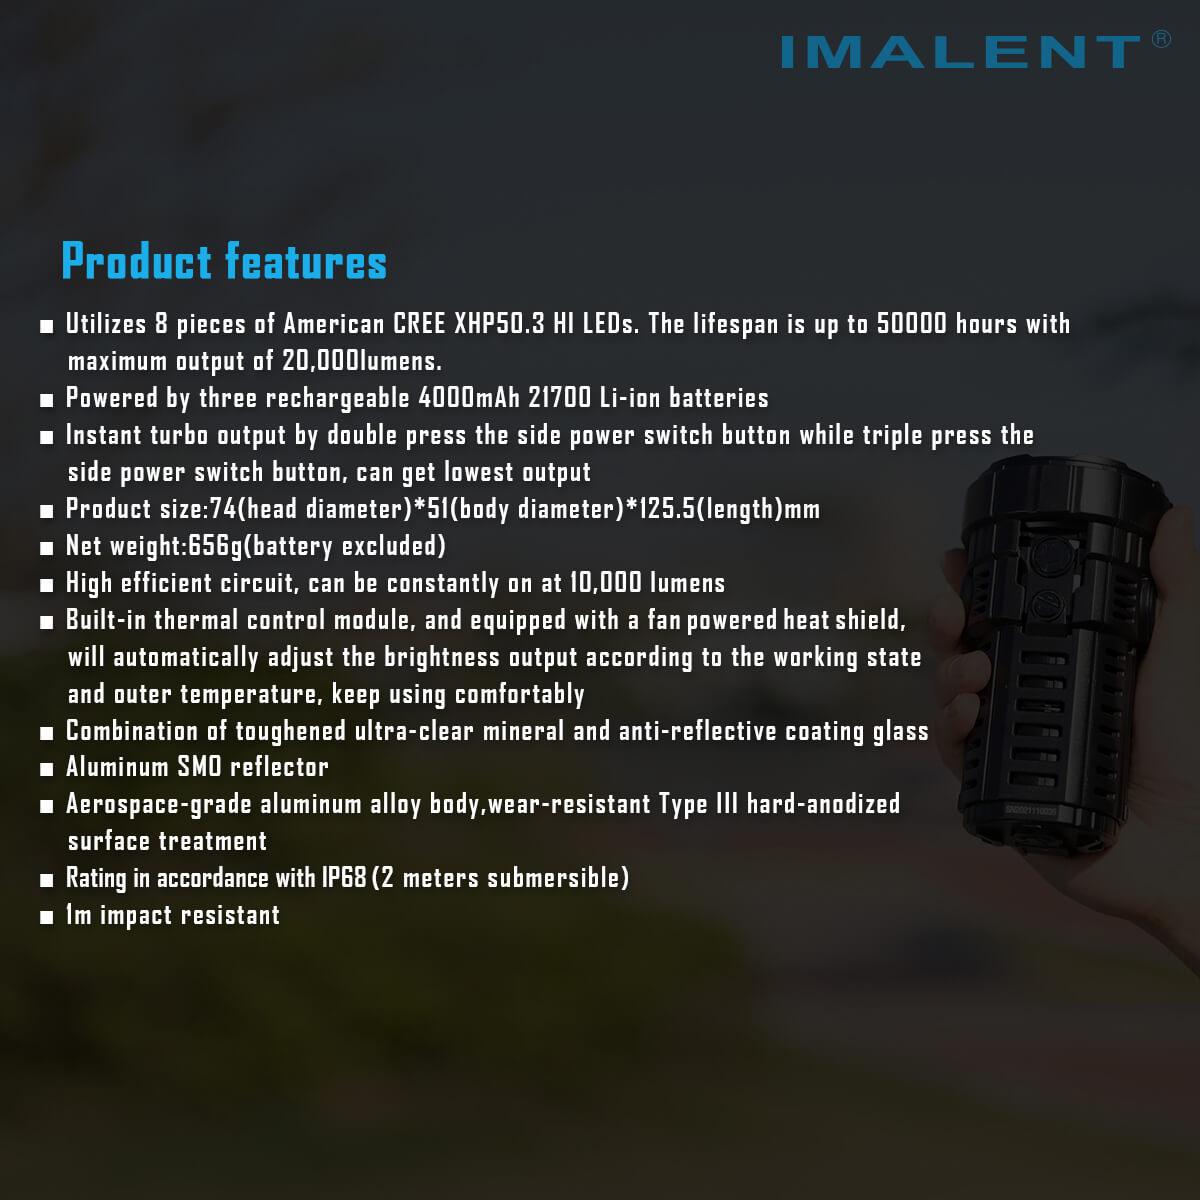 Imalent RS50